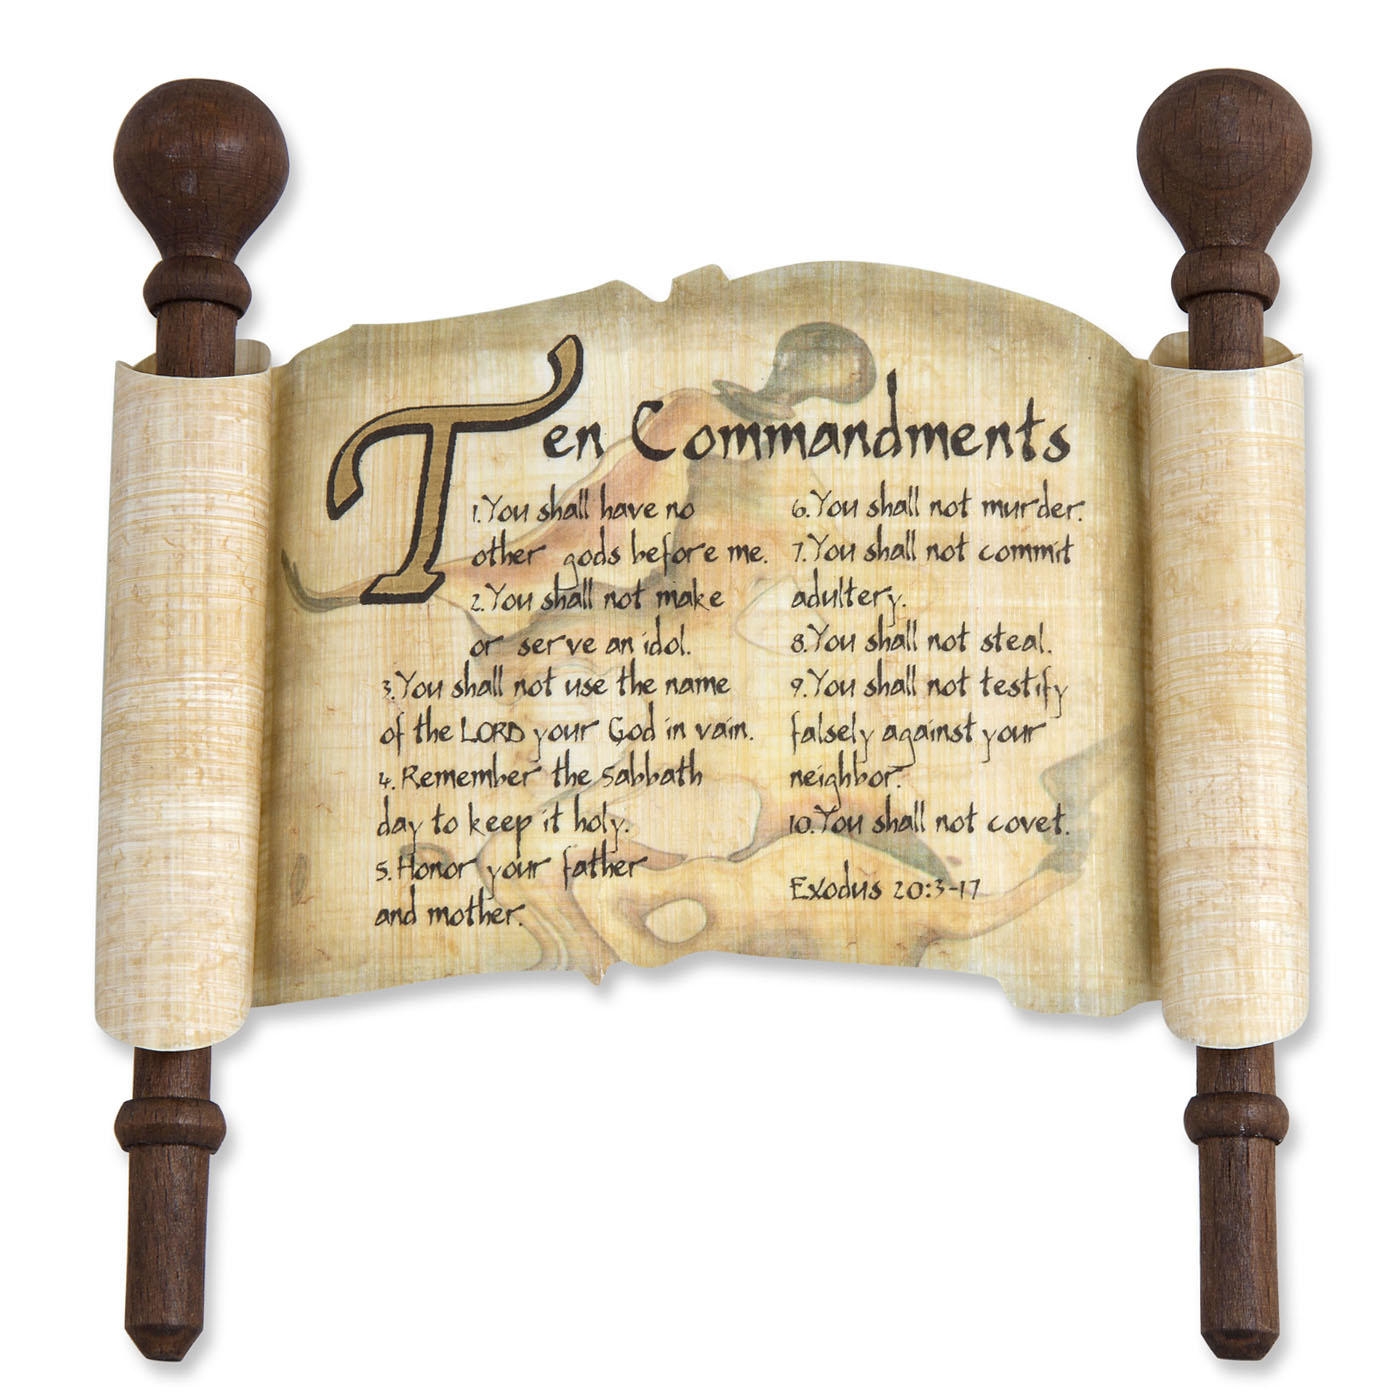 Papyrus Torah Scroll - Ten Commandments - 2